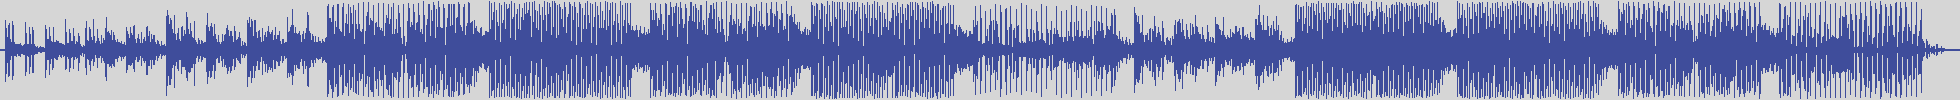 nf_boyz_records [NFY064] Eduard Smith - Different Times [Senior Mix] audio wave form